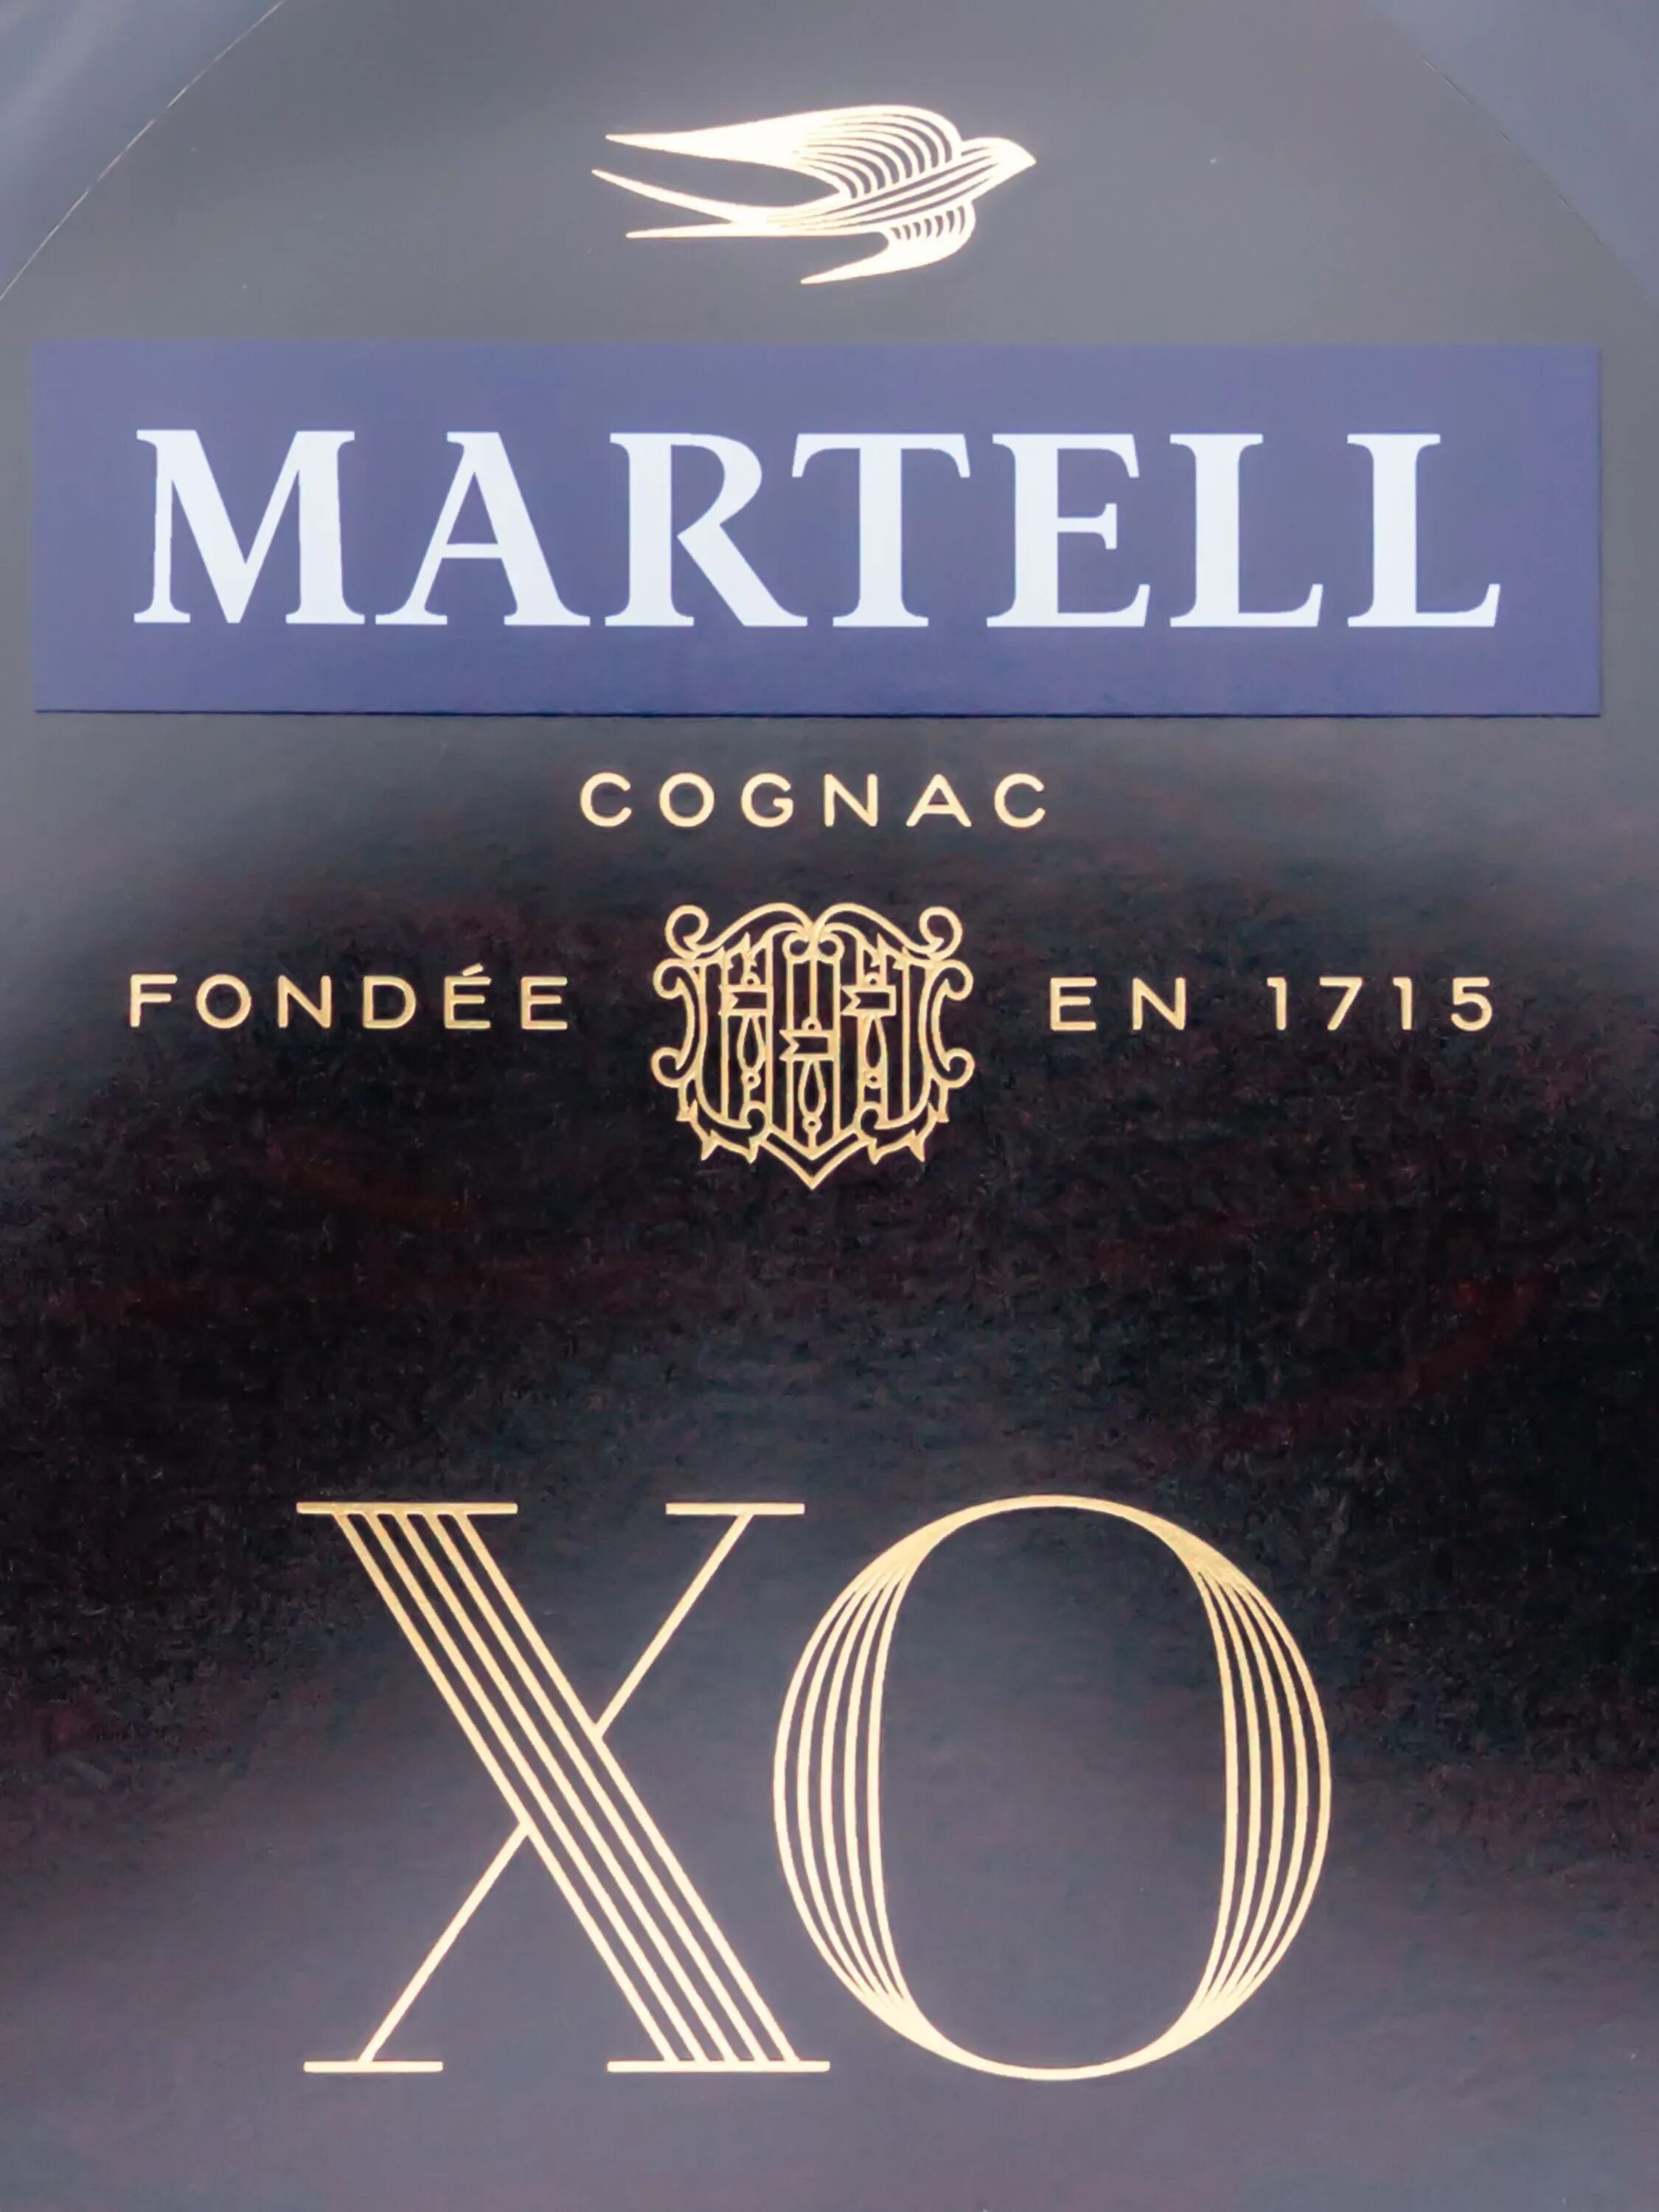 Martell 0.7 цена. Мартель Хо 0.5. Коньяк Мартель XO. Cognac Martell 1968. Vs Martel XO коньяк.